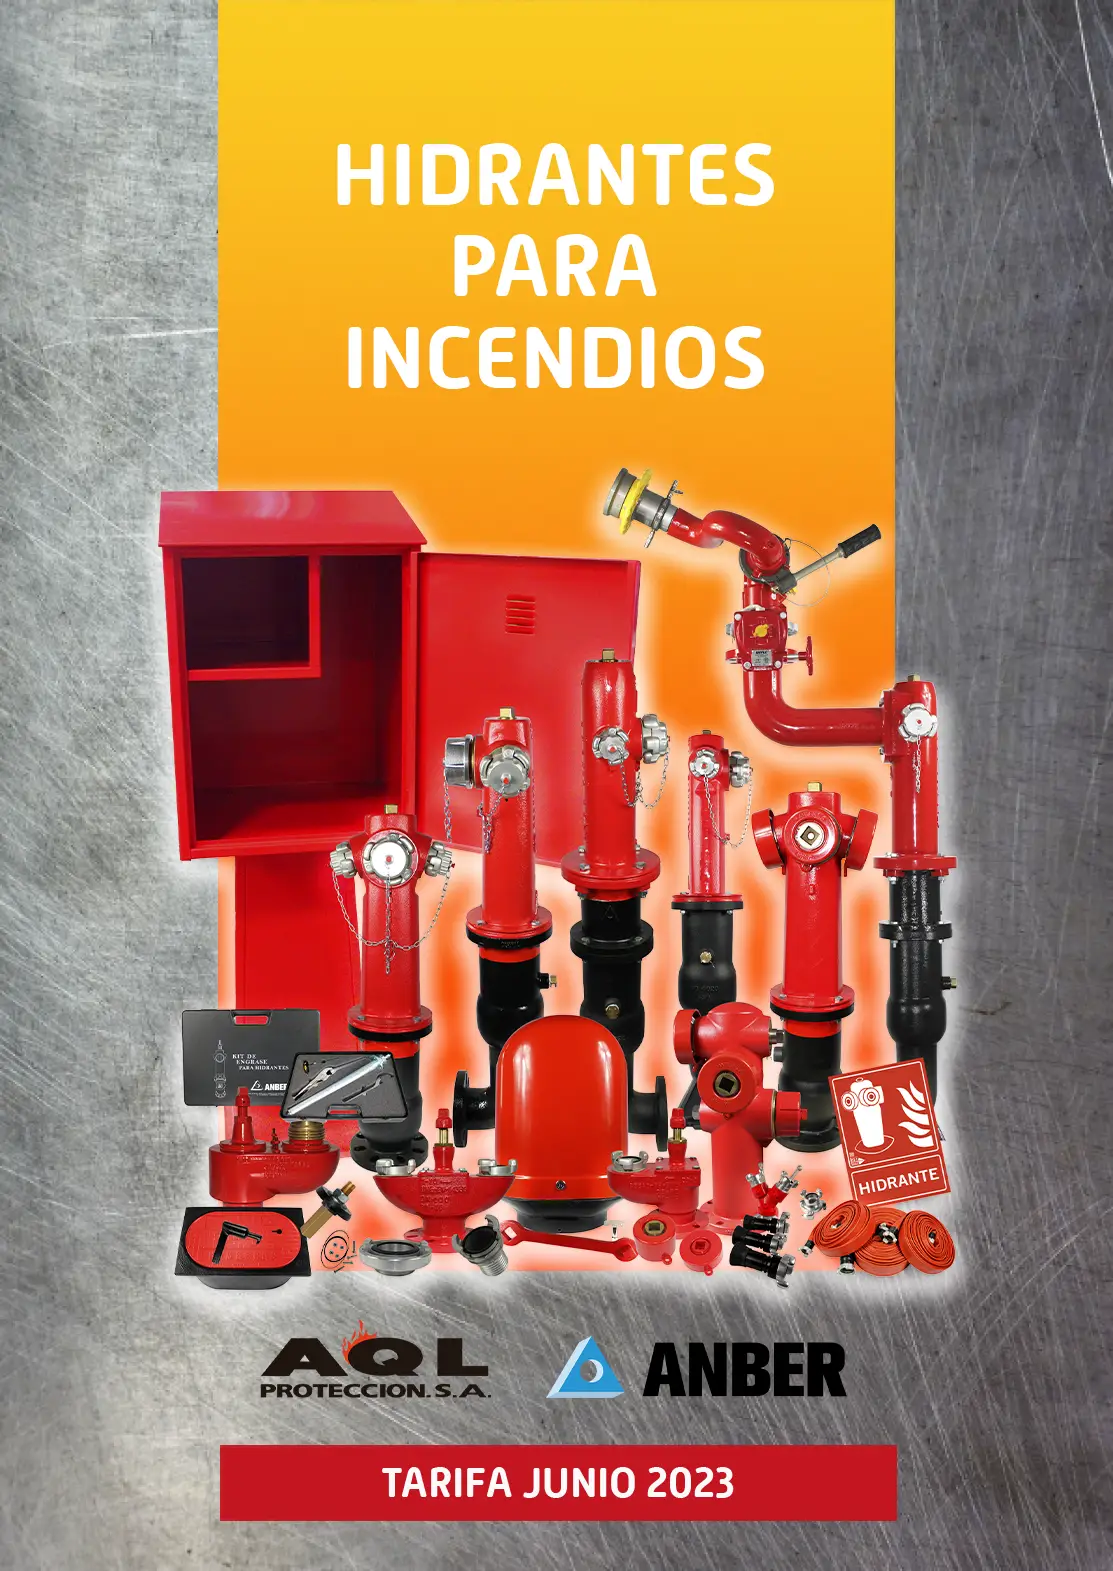 Imagen de la portada de la tarifa Hidrantes para incendios